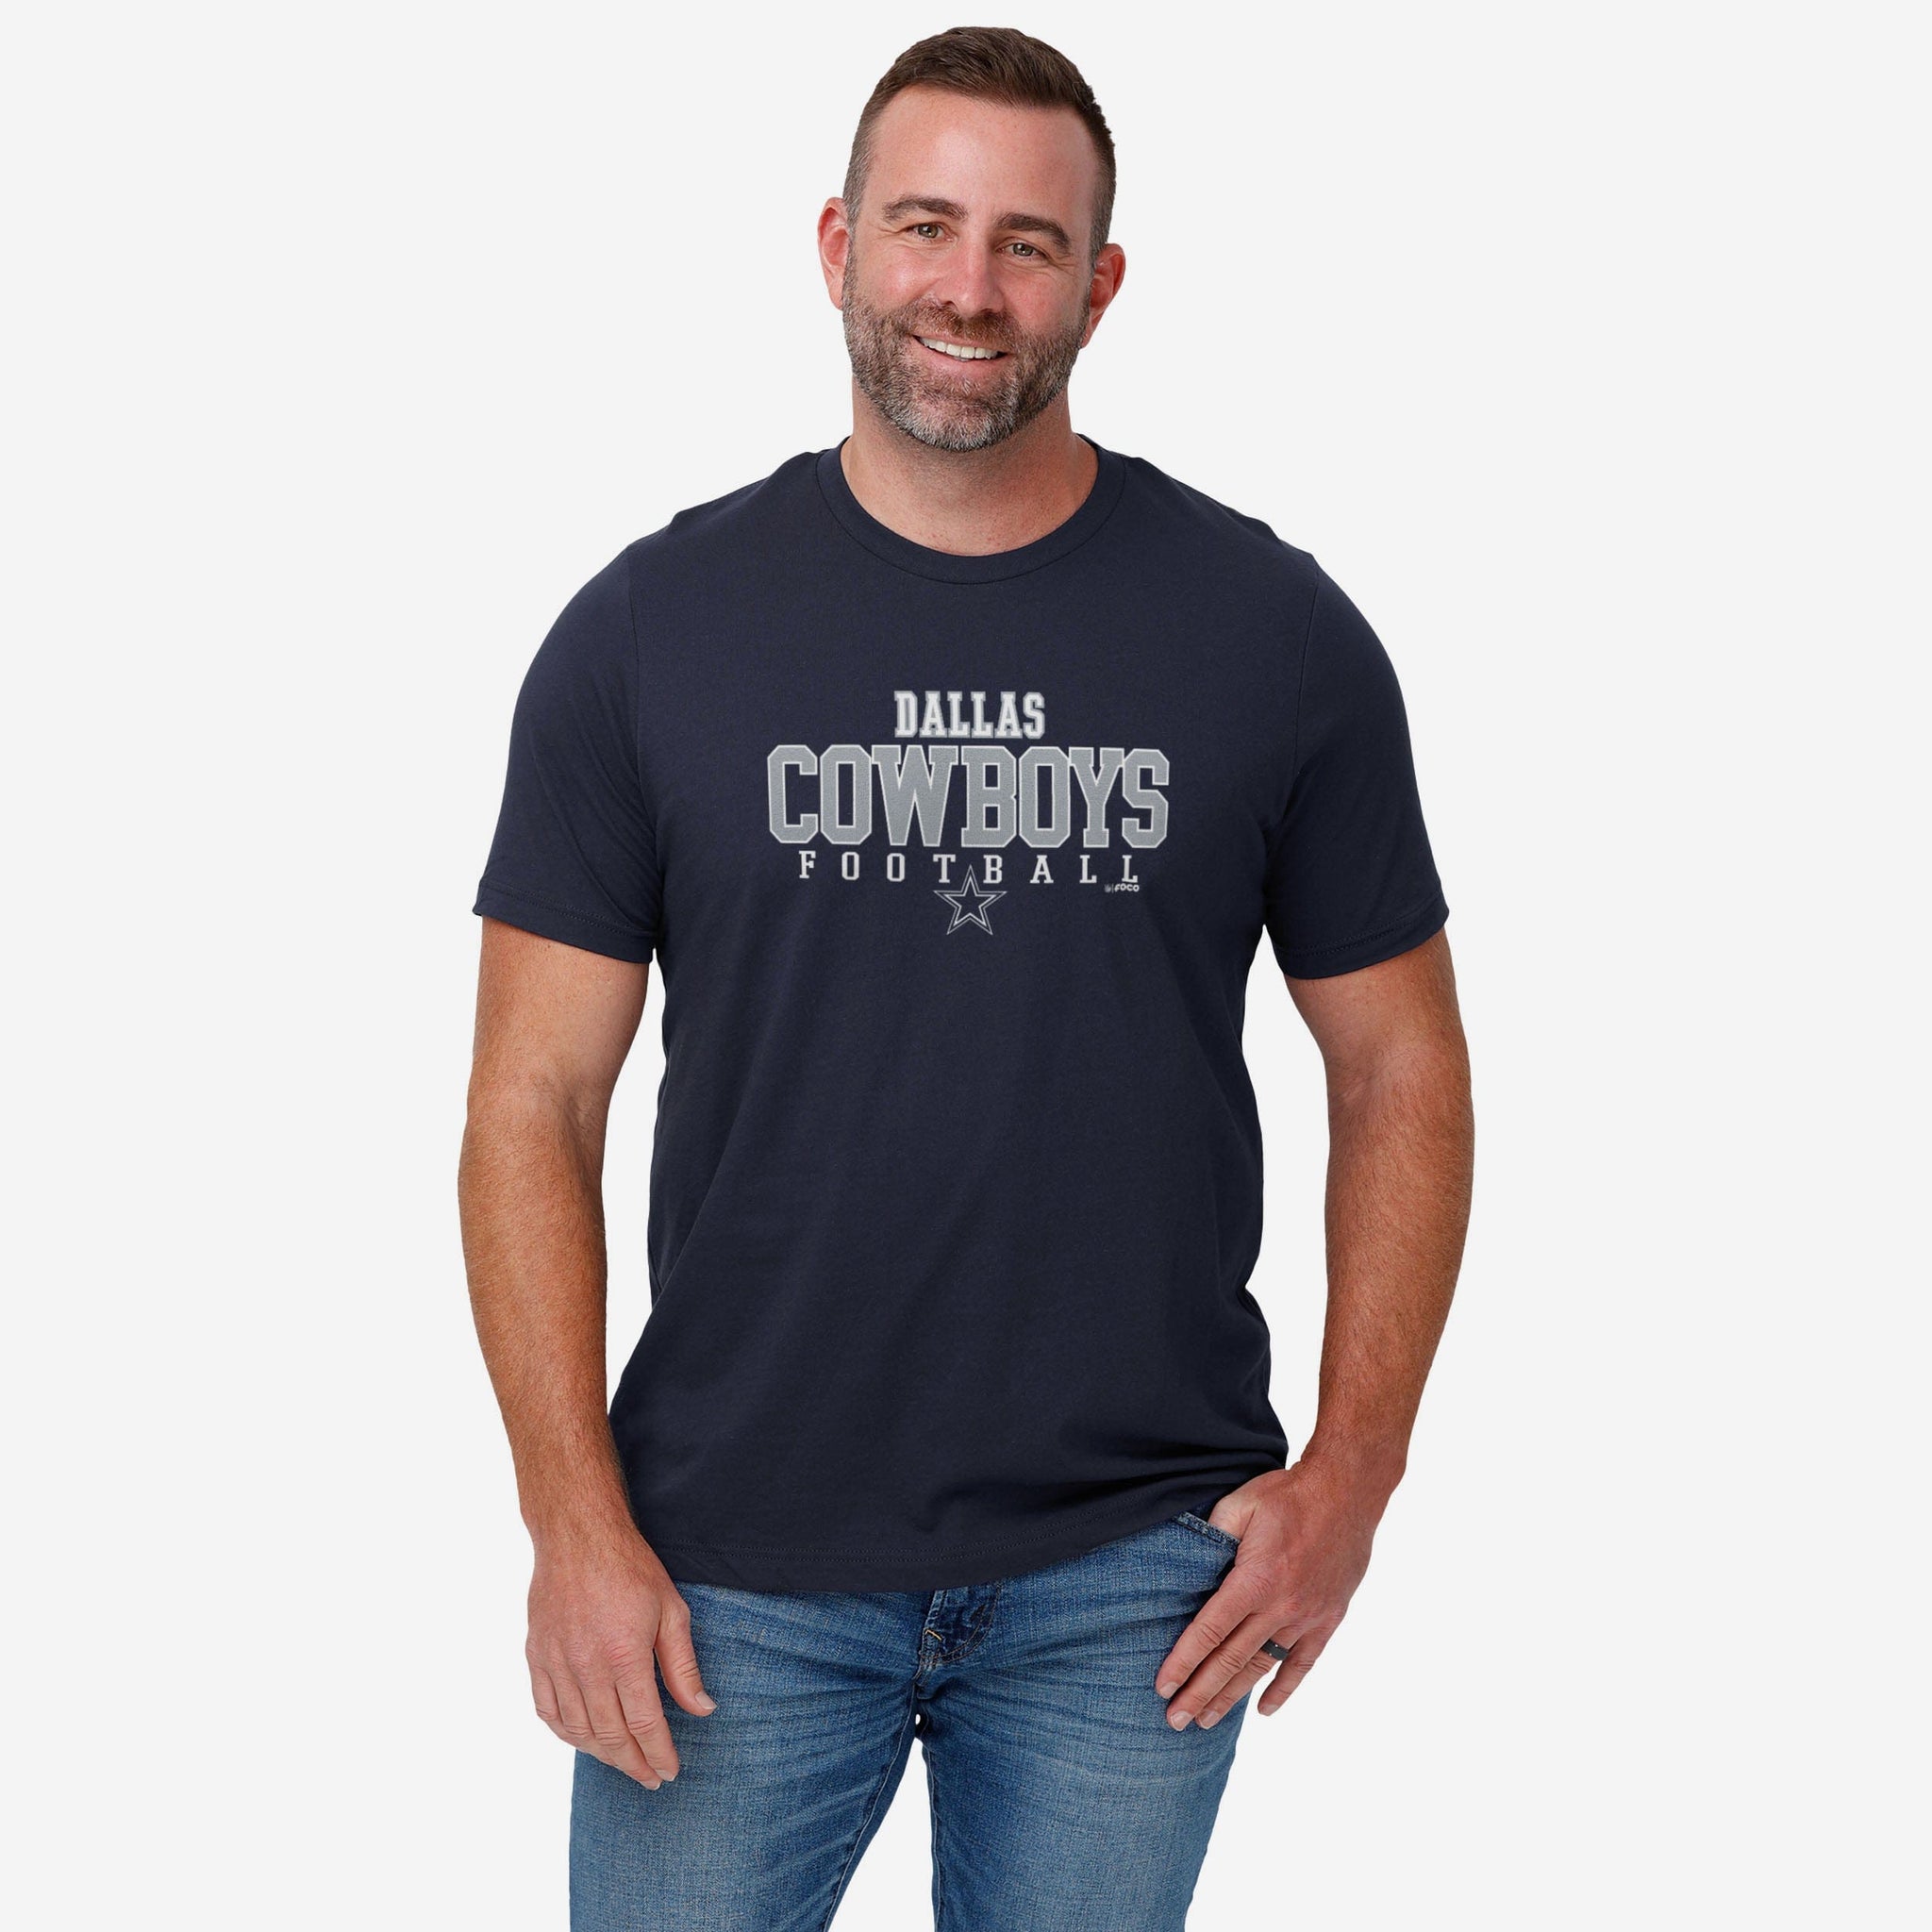 Dallas Cowboys Gameday Gear, Cowboys Tailgate Supplies